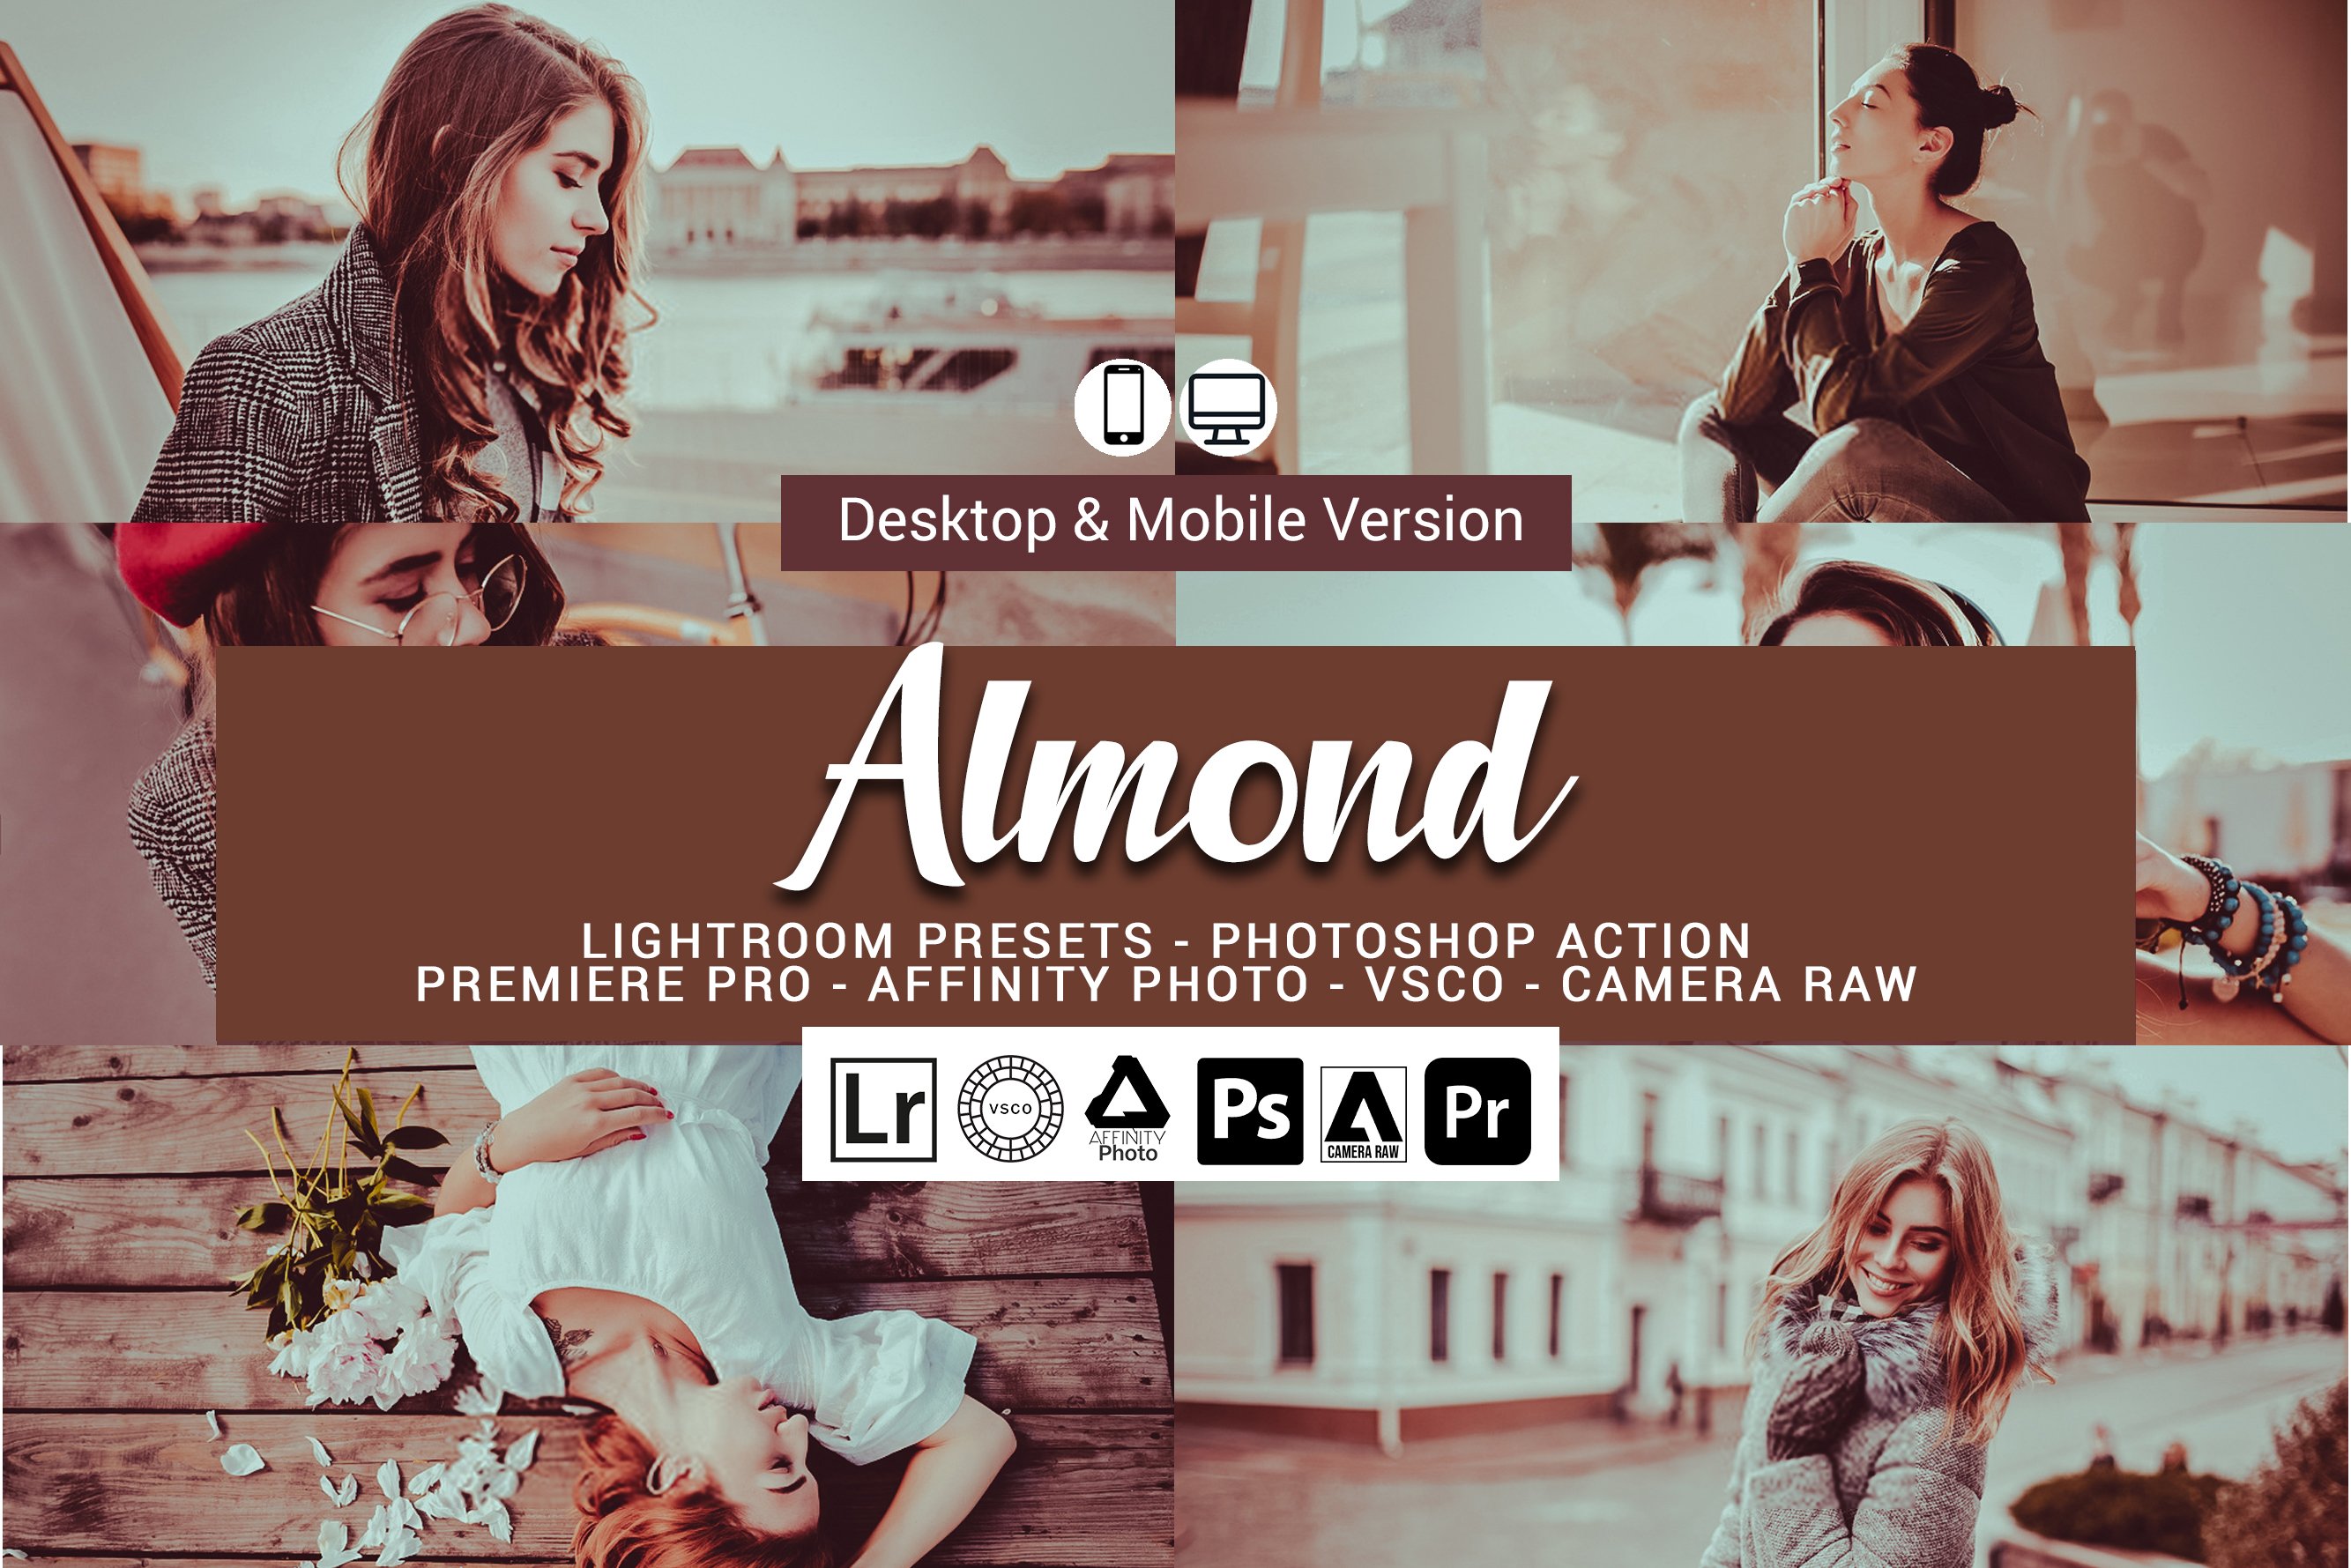 Almond Lightroom Presetscover image.